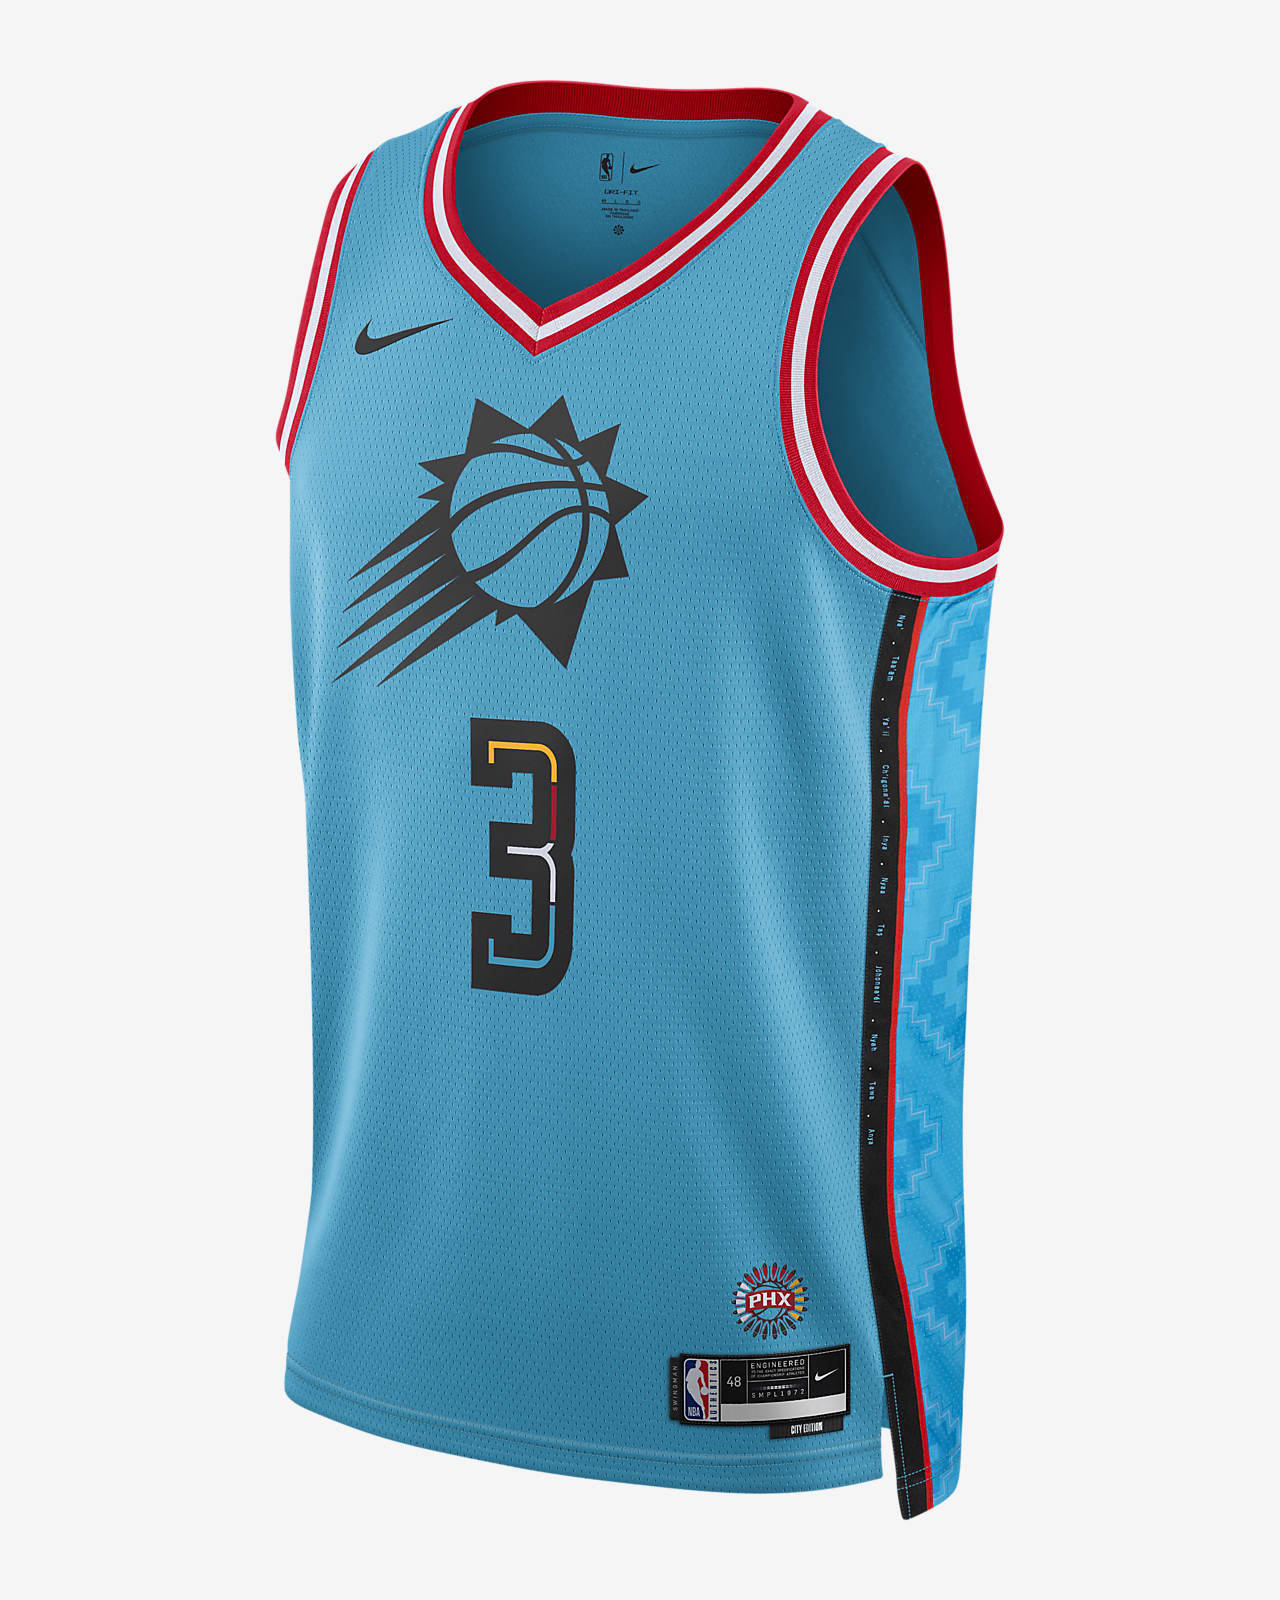 Jersey de la NBA Nike Chris Paul City Edition. Nike.